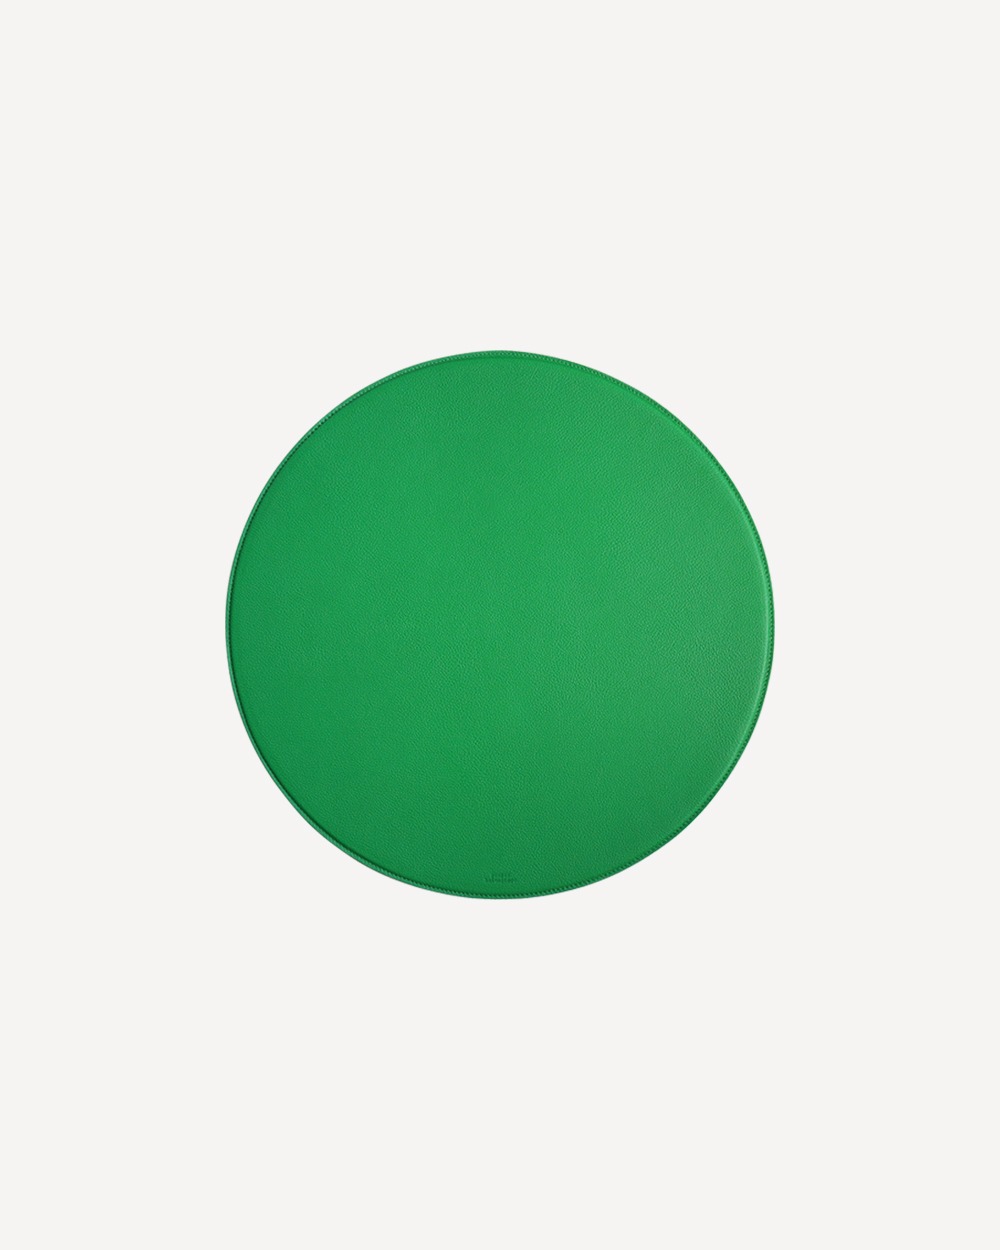 Island Desk Mat | Circle / Green pea